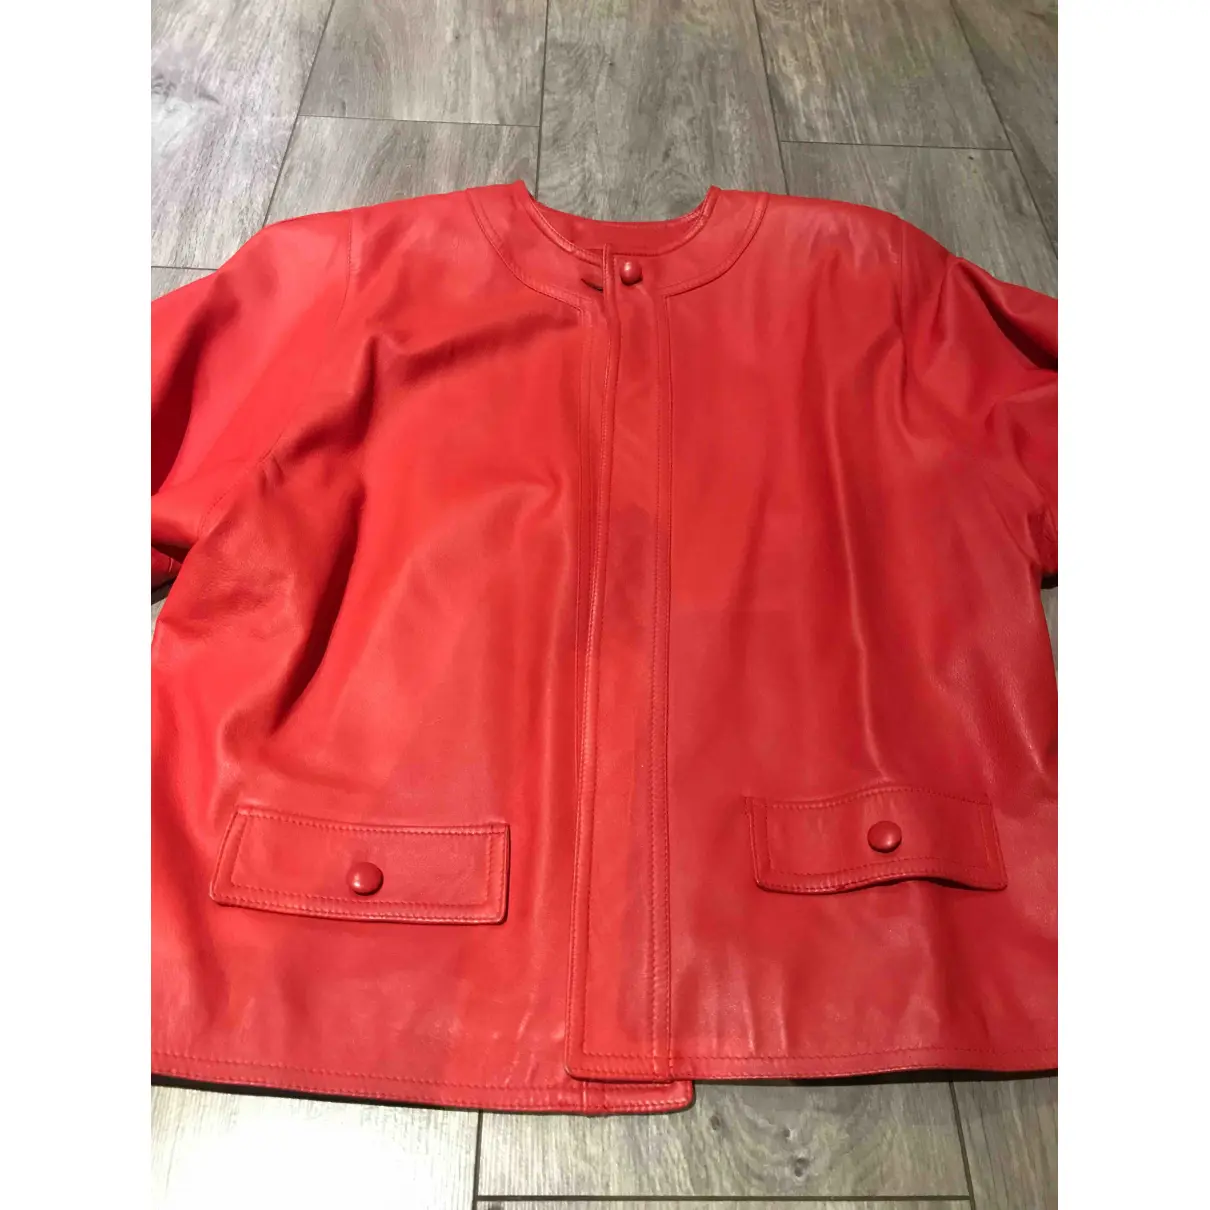 Buy Leonard Leather jacket online